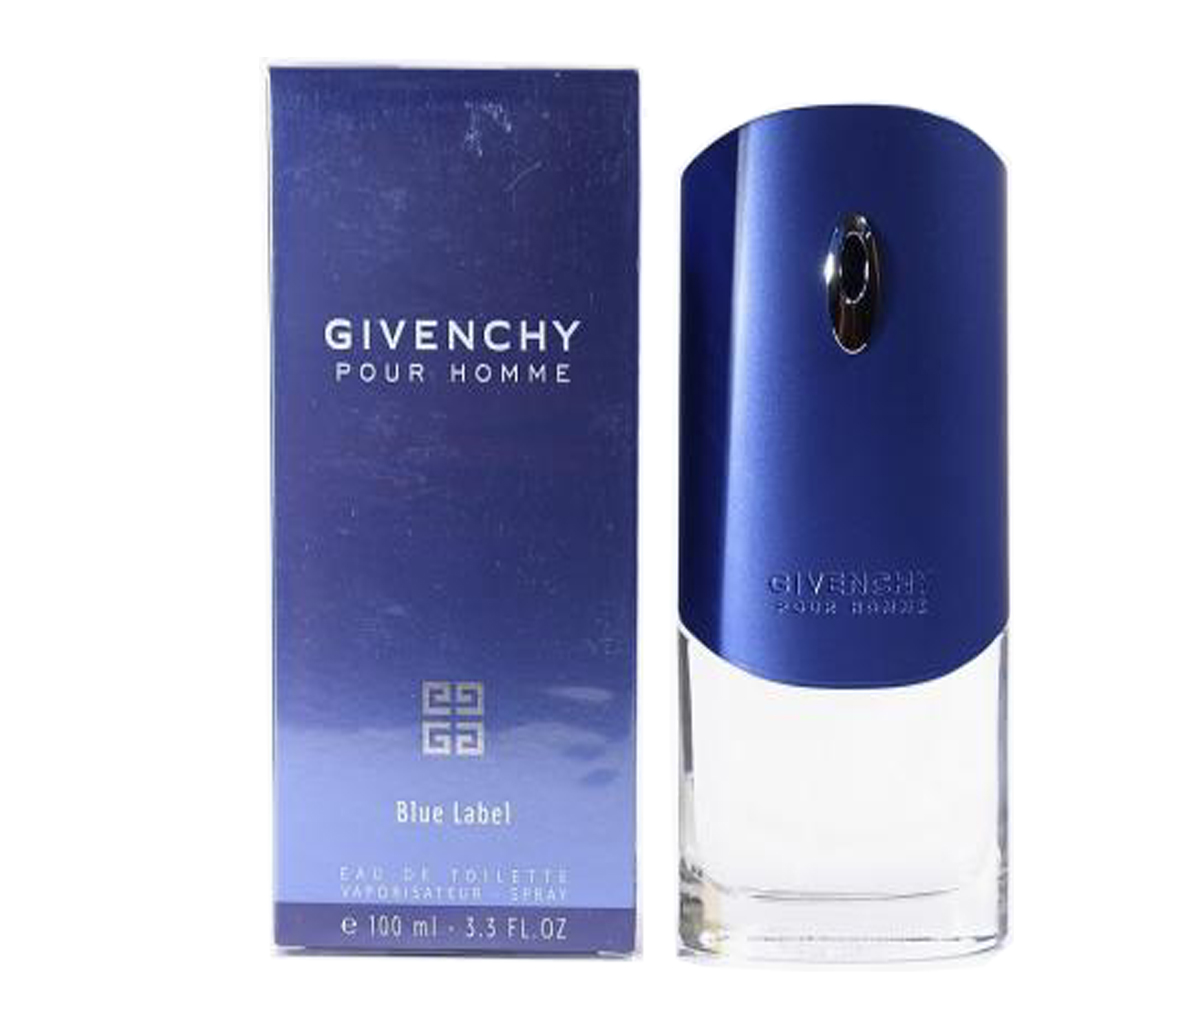 Givenchy pour homme 100. Givenchy pour homme Blue Label EDT, 100 ml. Givenchy pour homme Blue Label 100ml. Givenchy Blue Label 100 мл. Givenchy pour homme Blue Label 100.